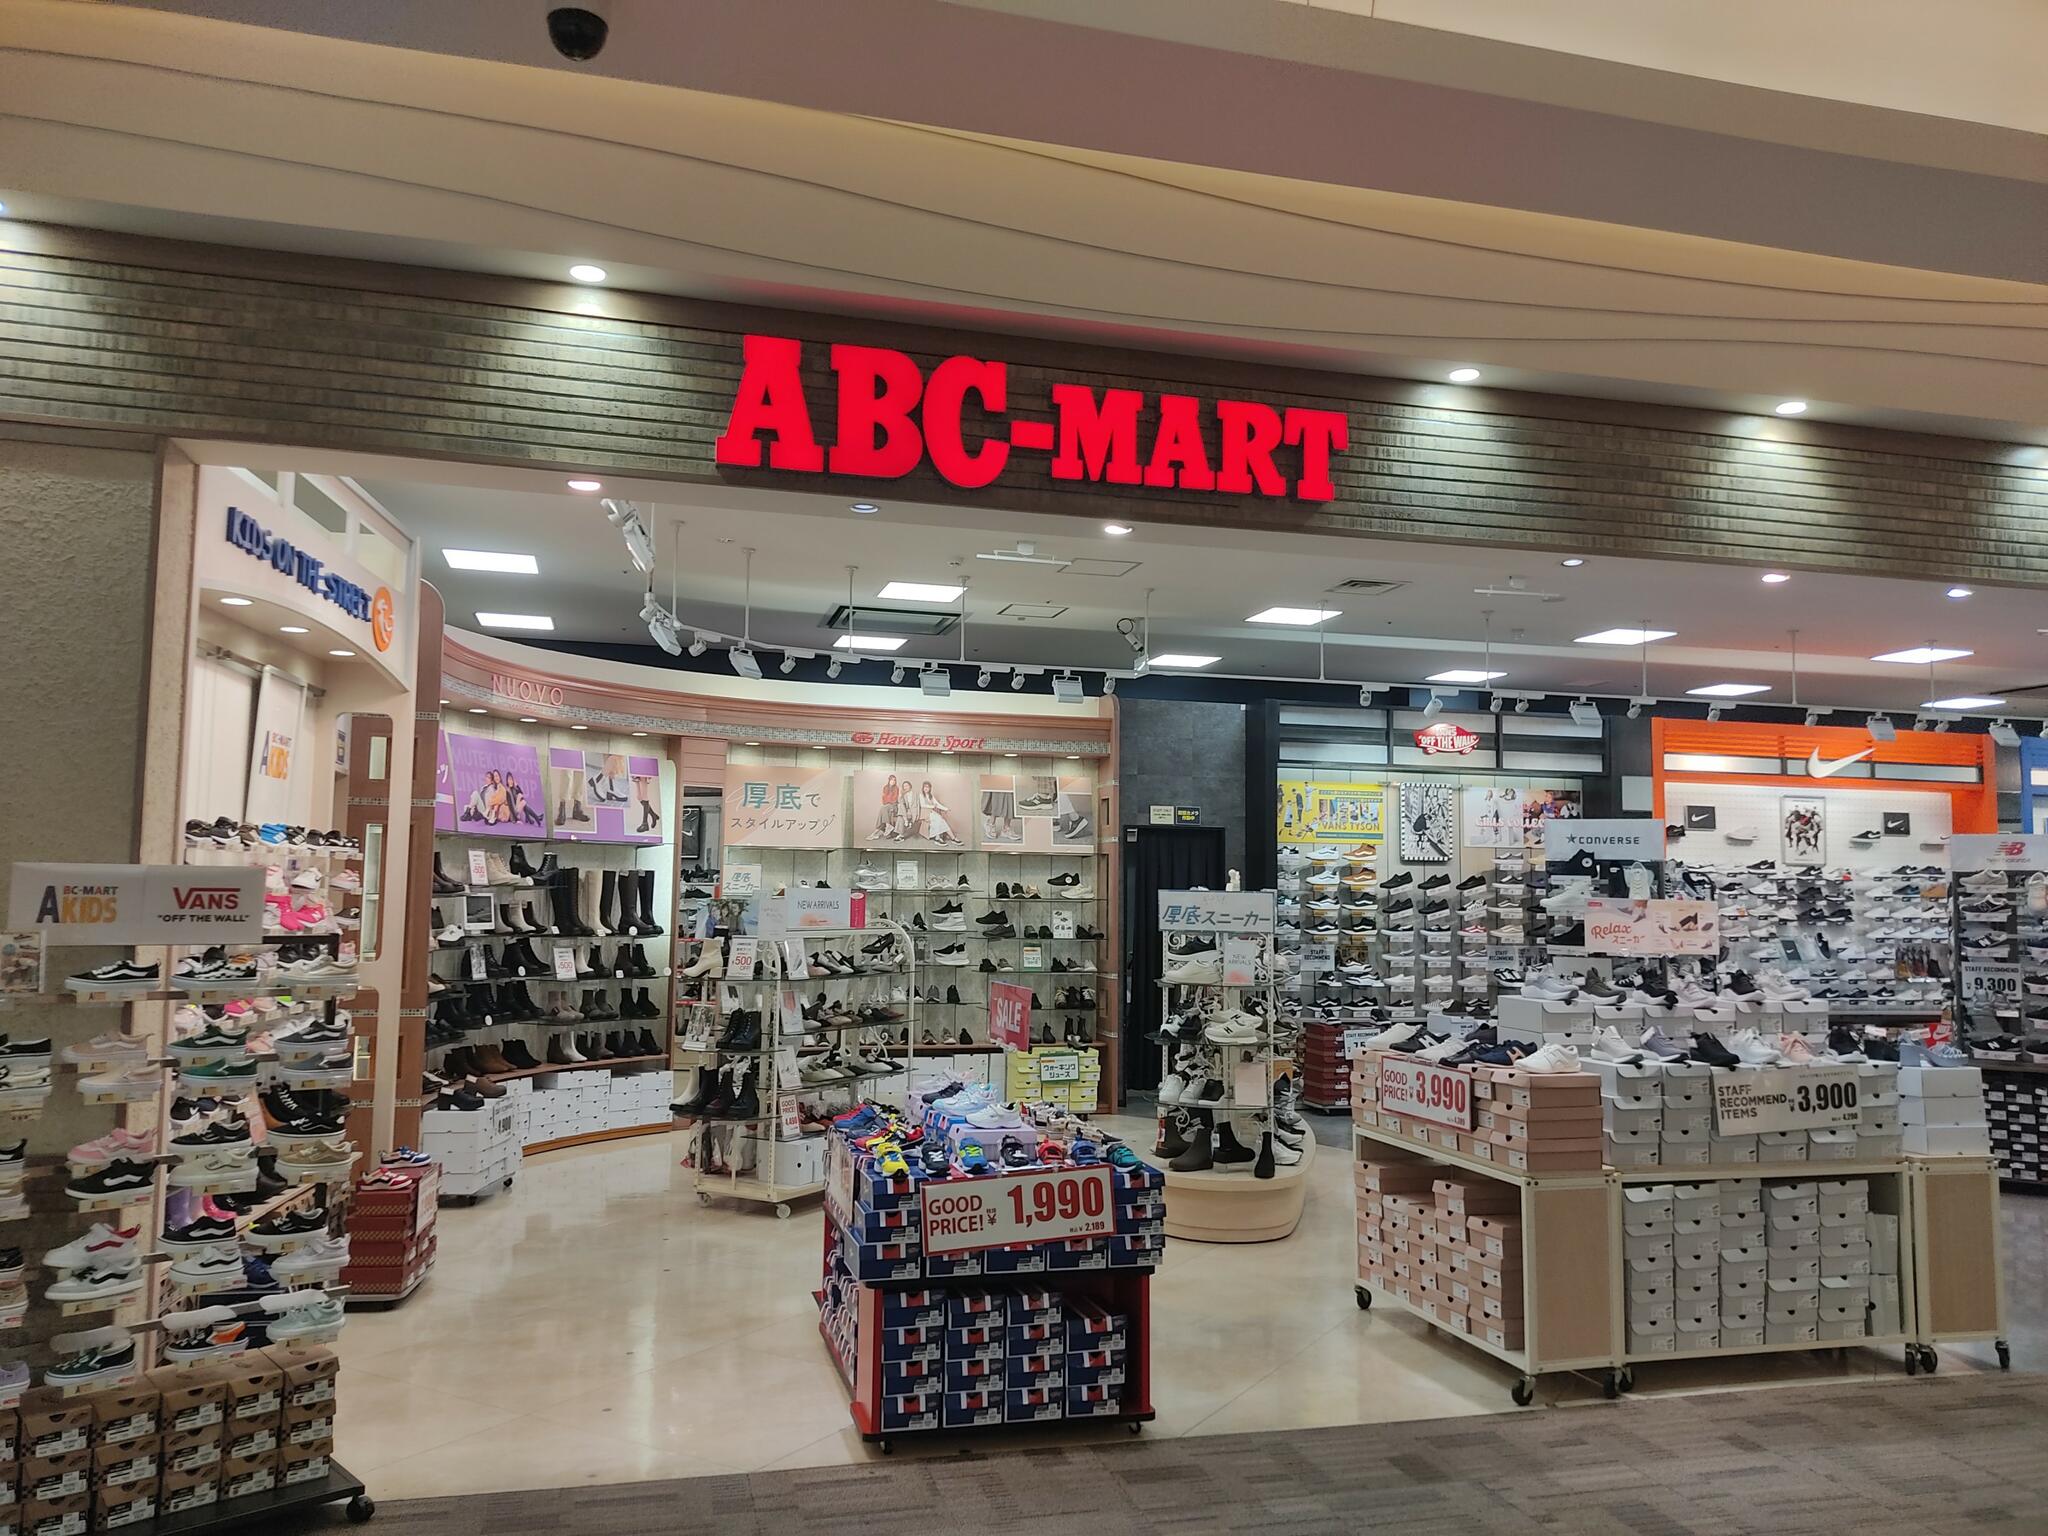 ABCマート サンエー宜野湾店の代表写真4